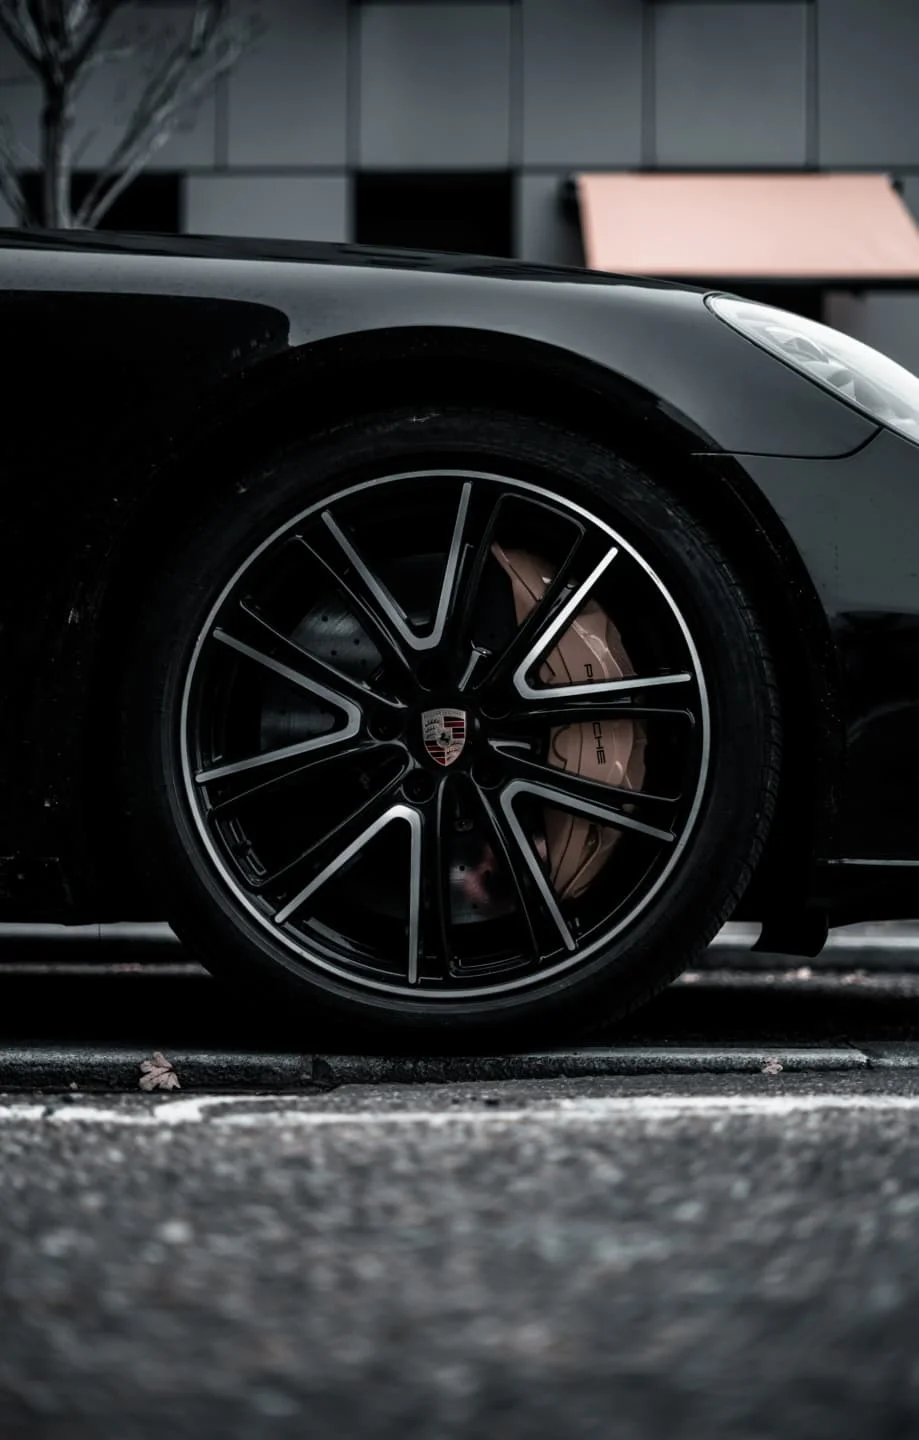 A close-up shot of a block Porsche with diamond cut alloys